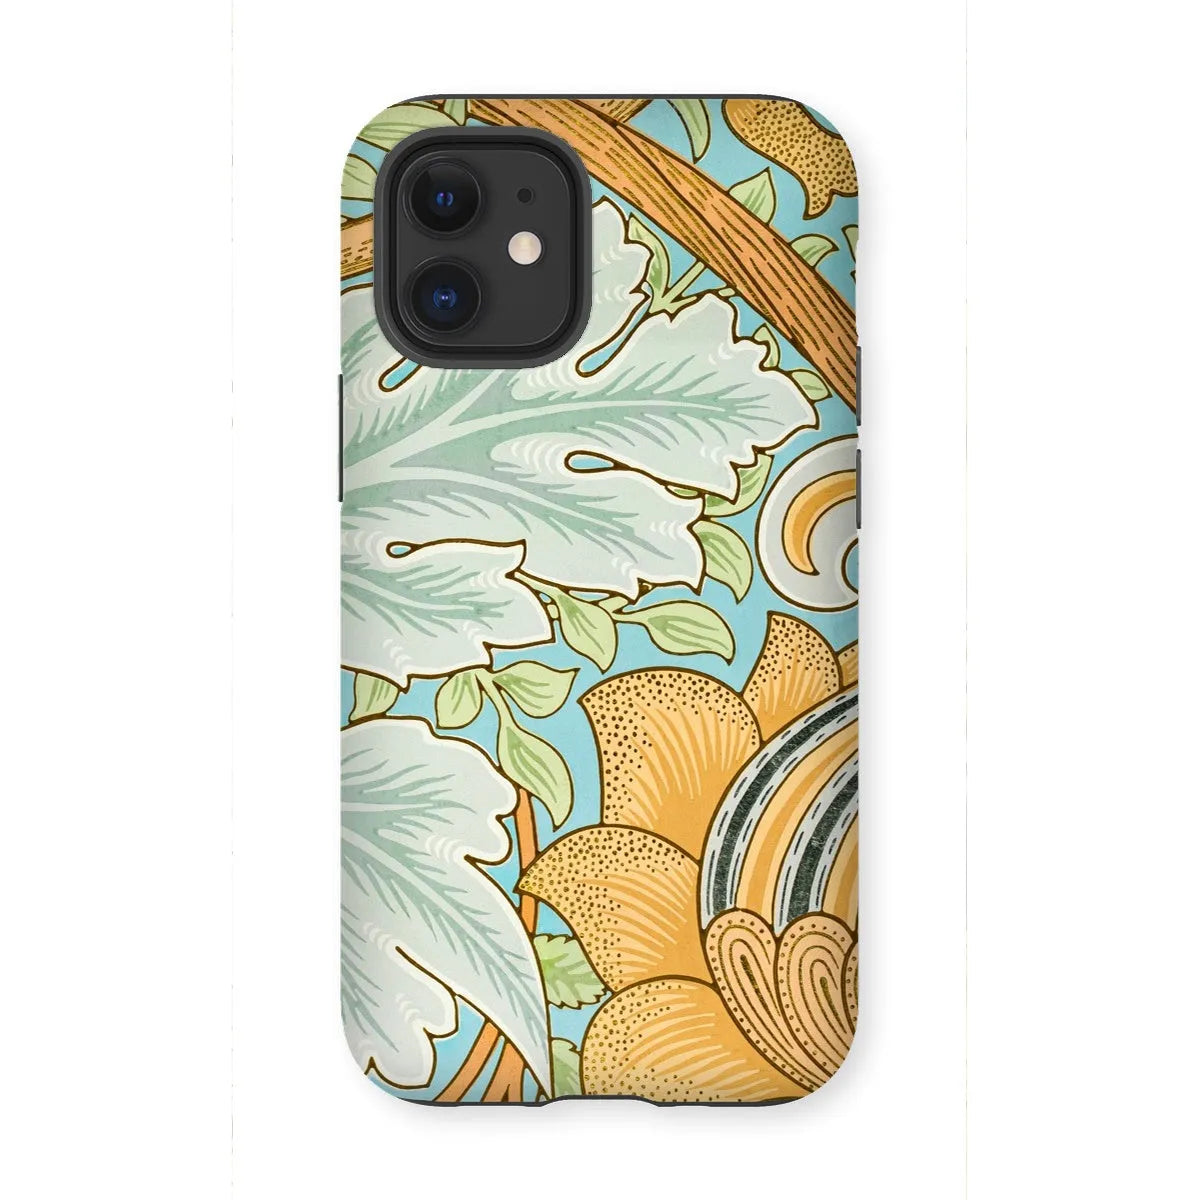 St. James - Arts And Crafts Phone Case - William Morris - Iphone 12 Mini / Matte - Mobile Phone Cases - Aesthetic Art